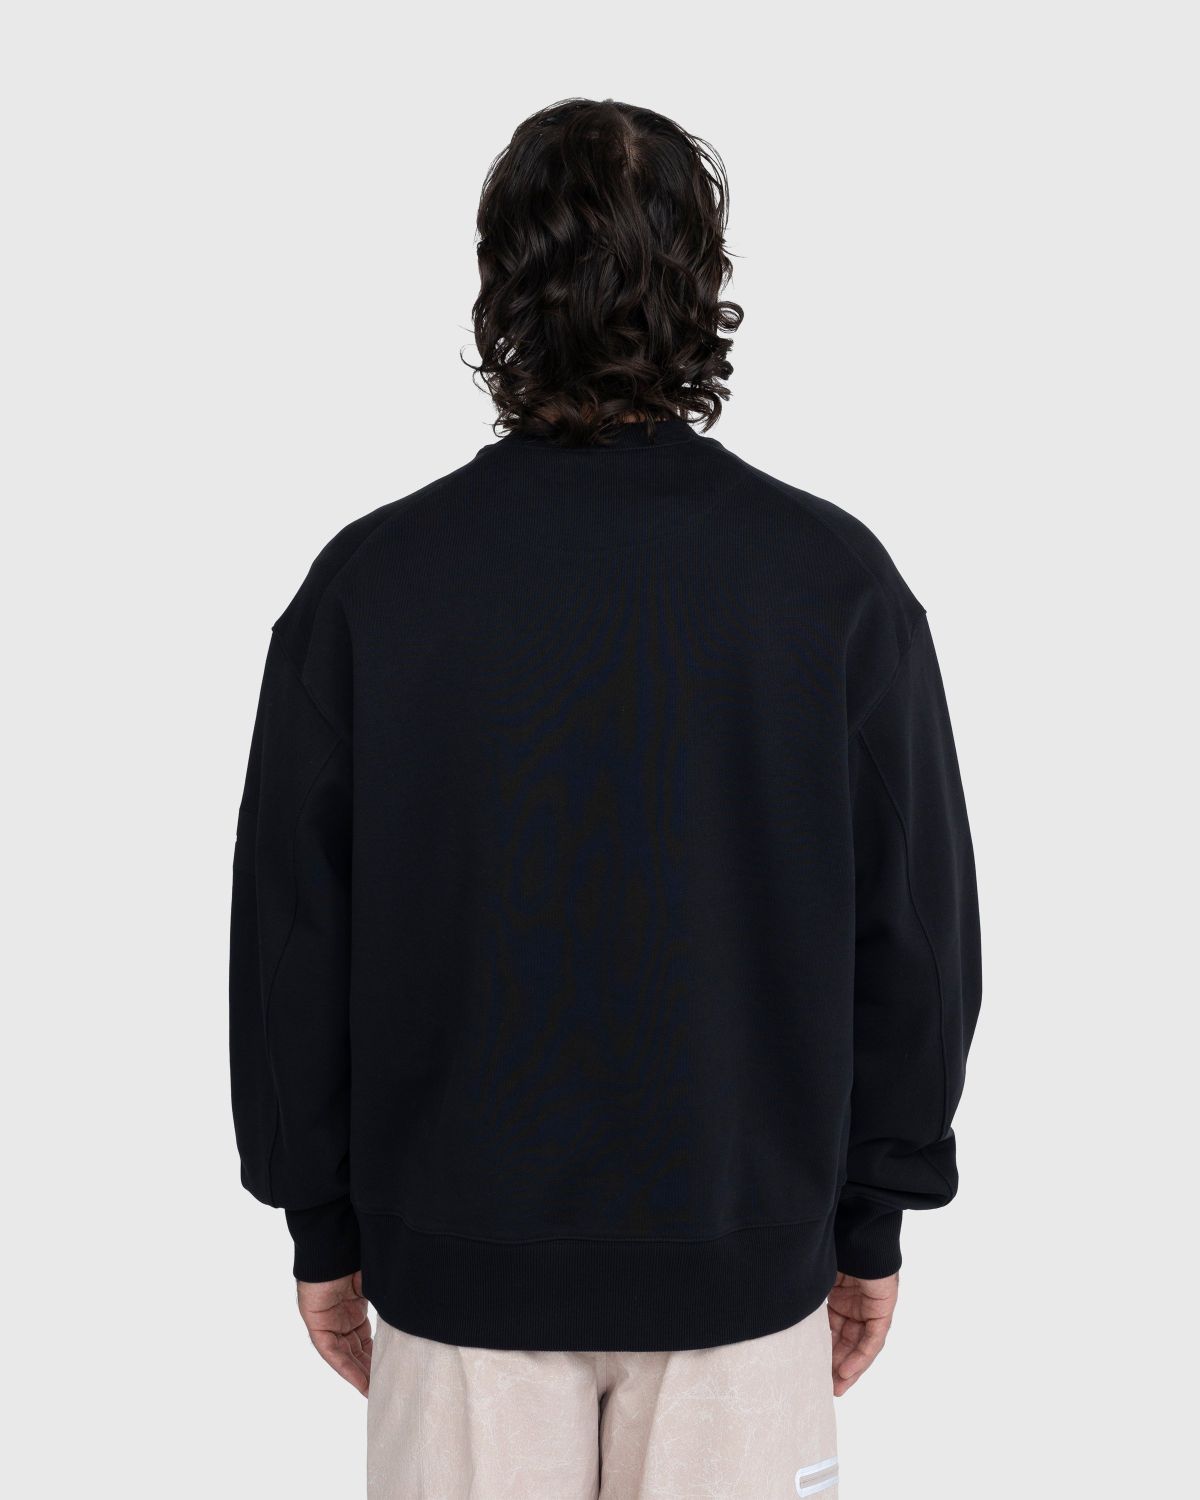 Y-3 – FT Crew Sweatshirt Black - Sweatshirts - Black - Image 3